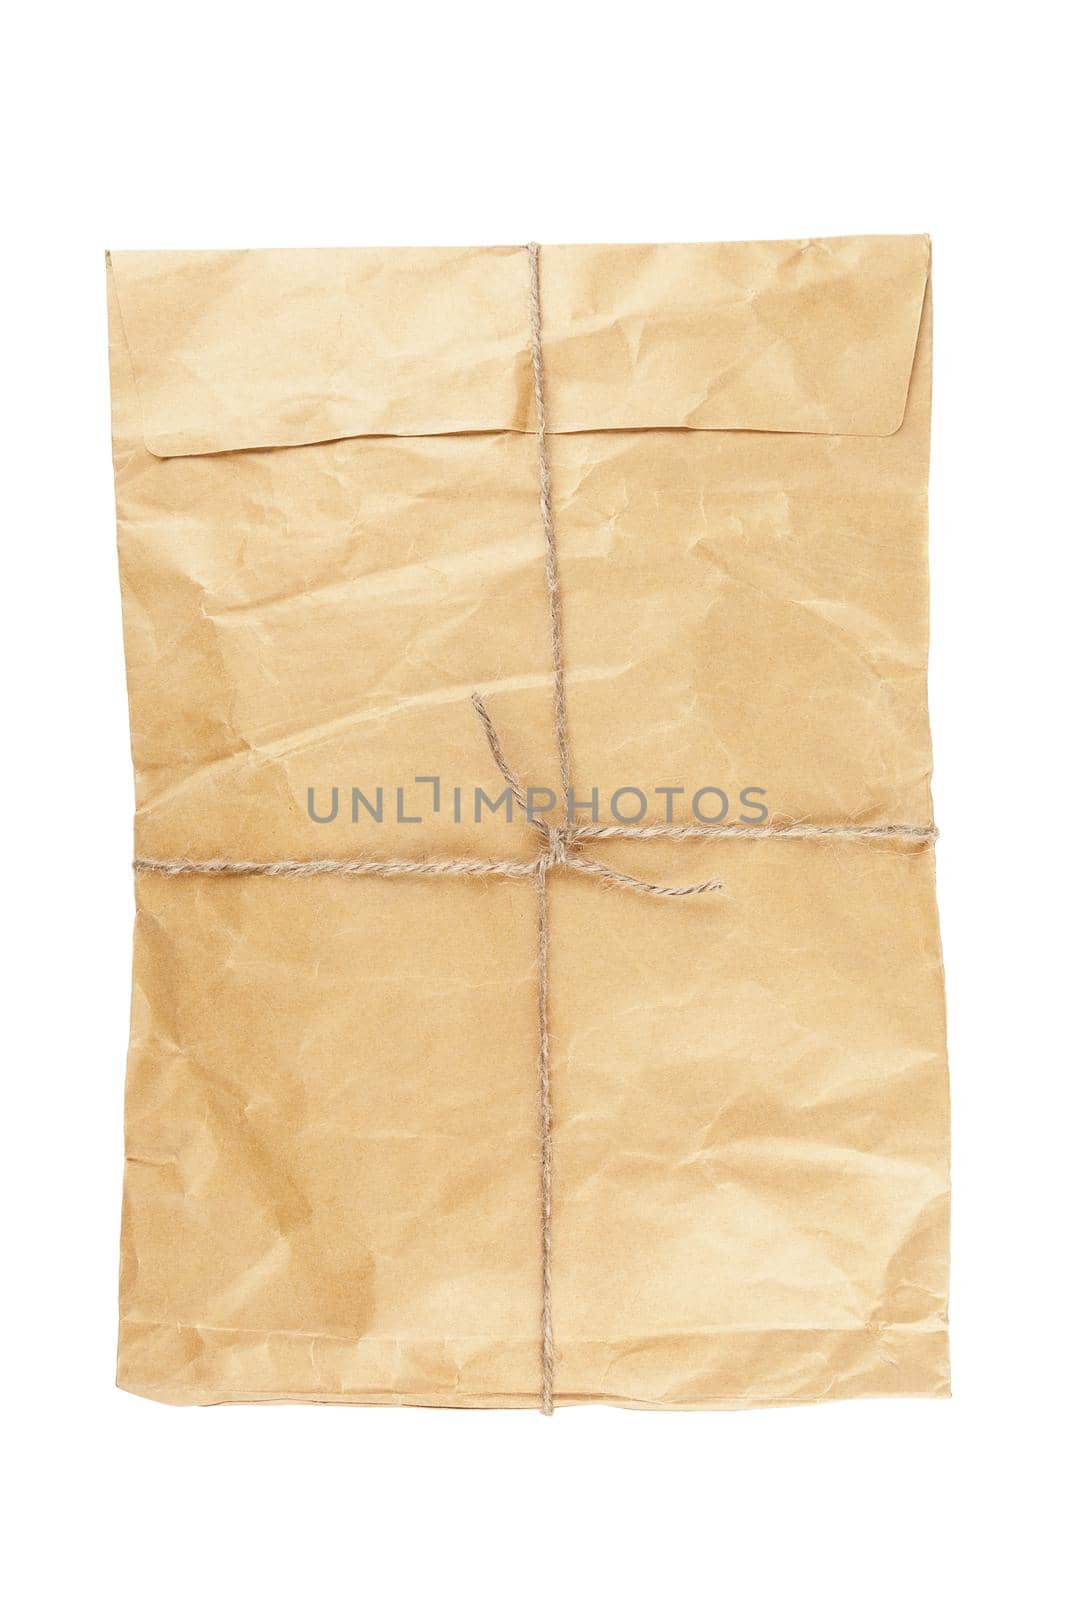 closeup brown envelope on white background